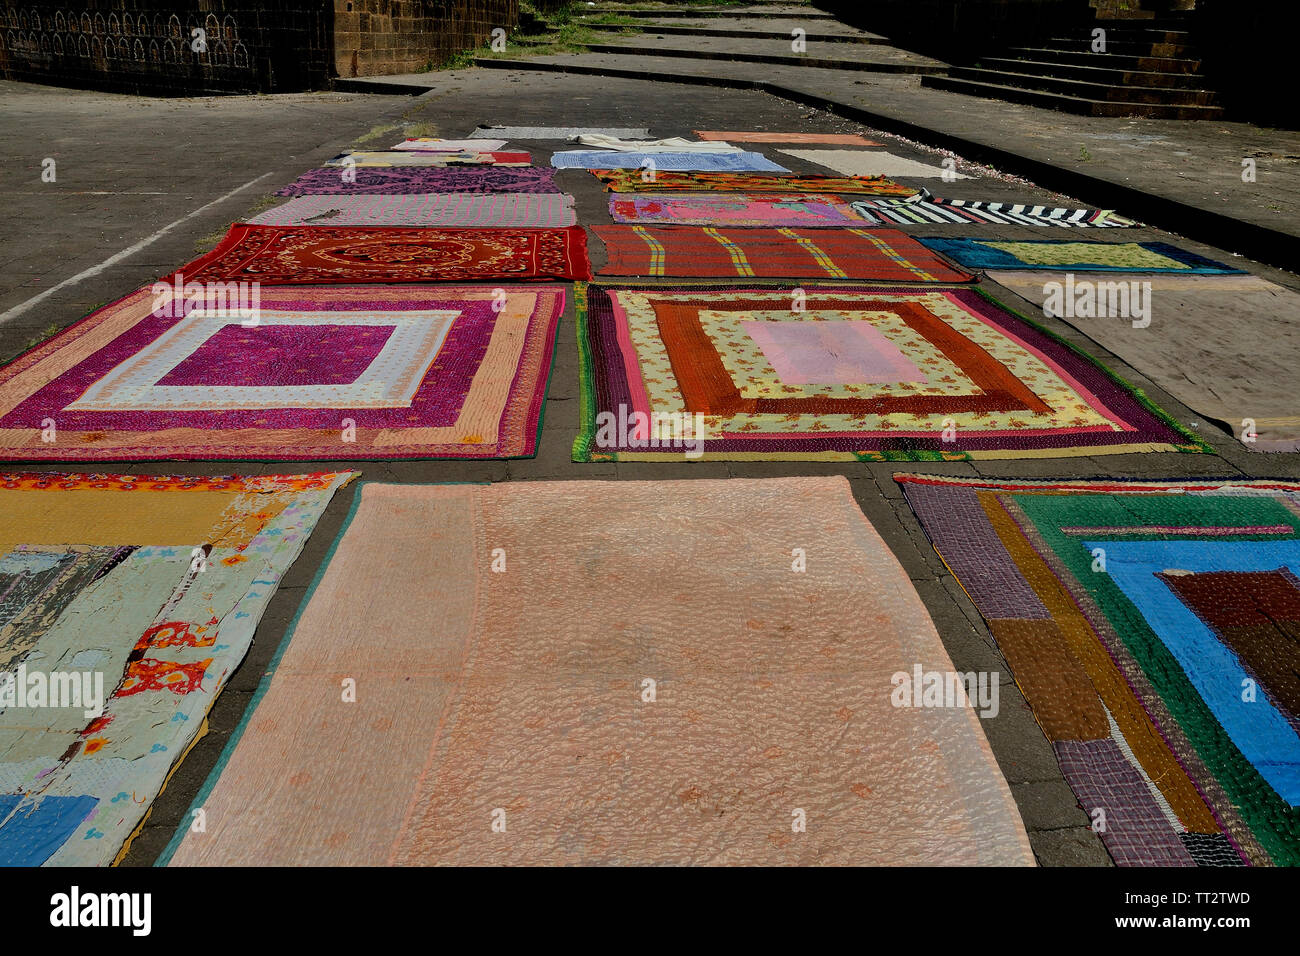 Colourful carpets and blankets displayed on the bank of Krishna river, Menavali, Wai, Maharashtra, India Stock Photo